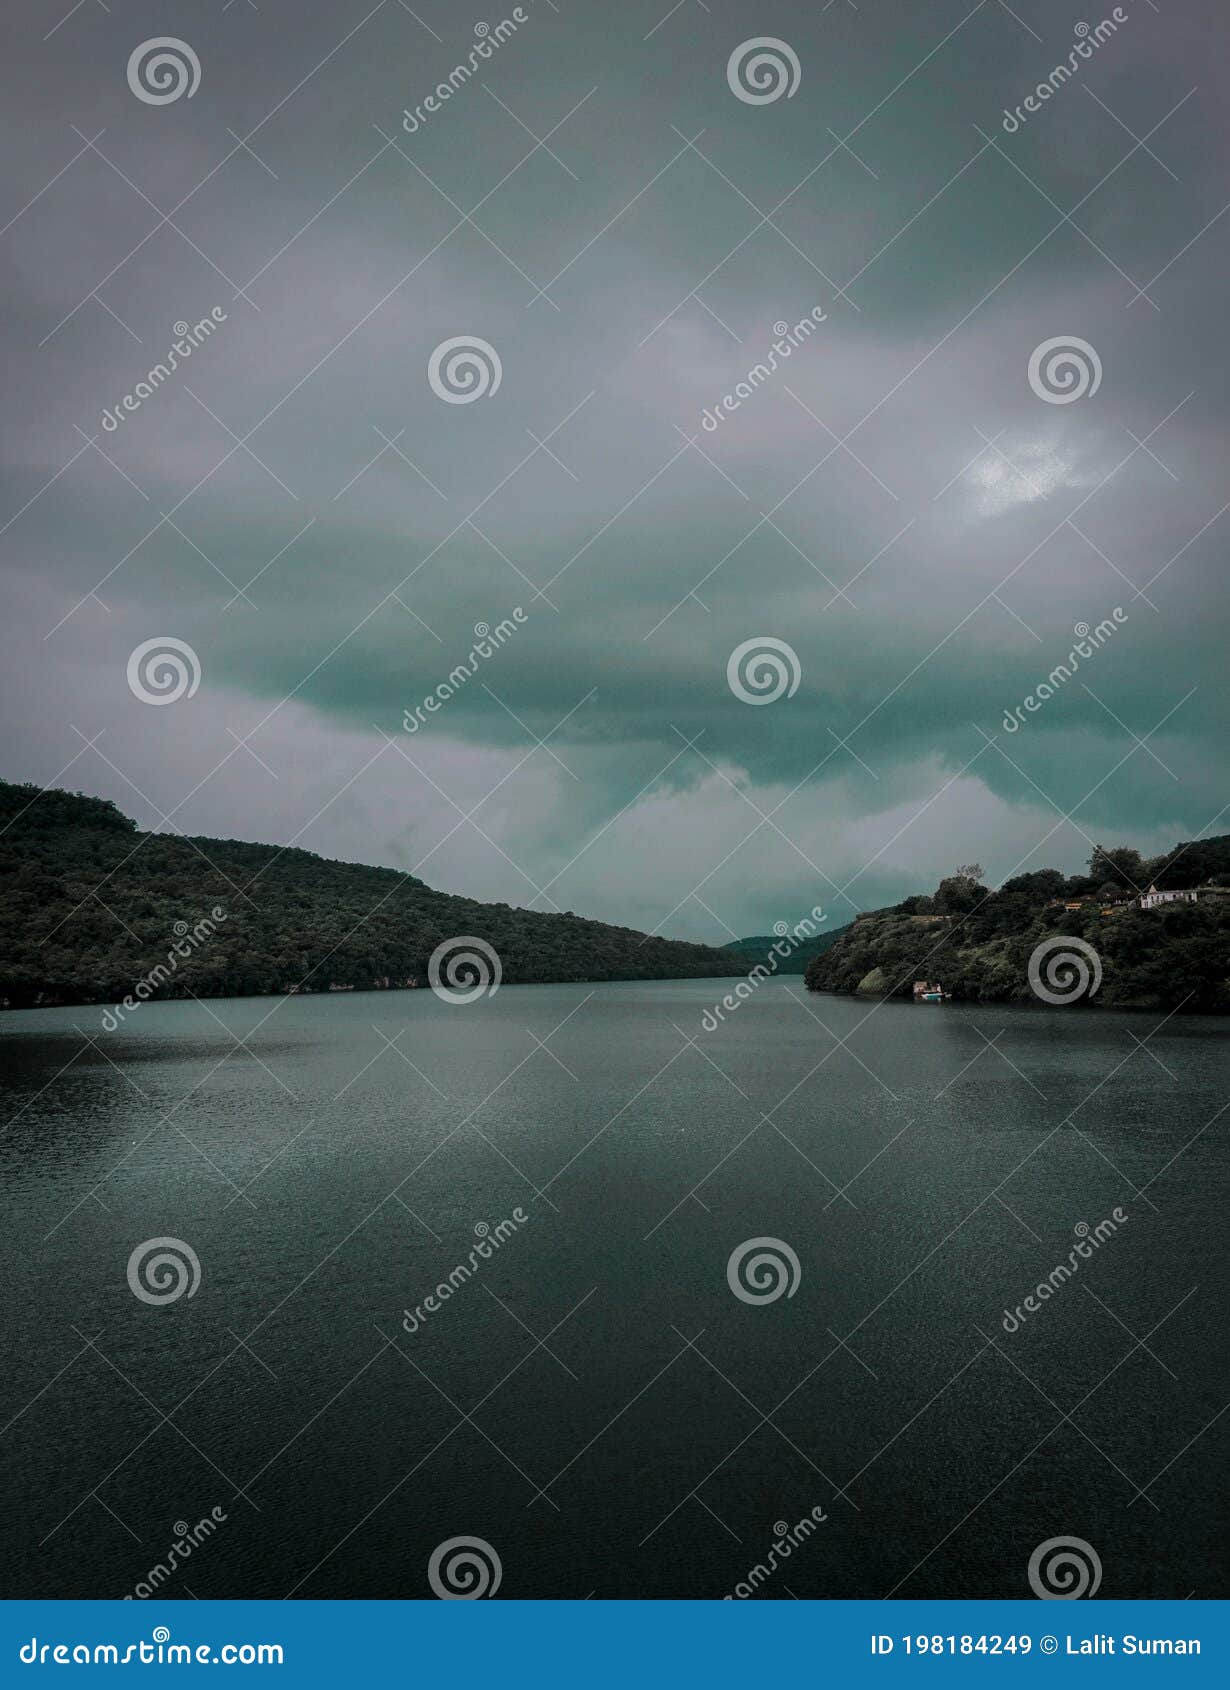 River Background, Landscape, Editing Background Stock Image - Image of  lake, landscape: 198184249